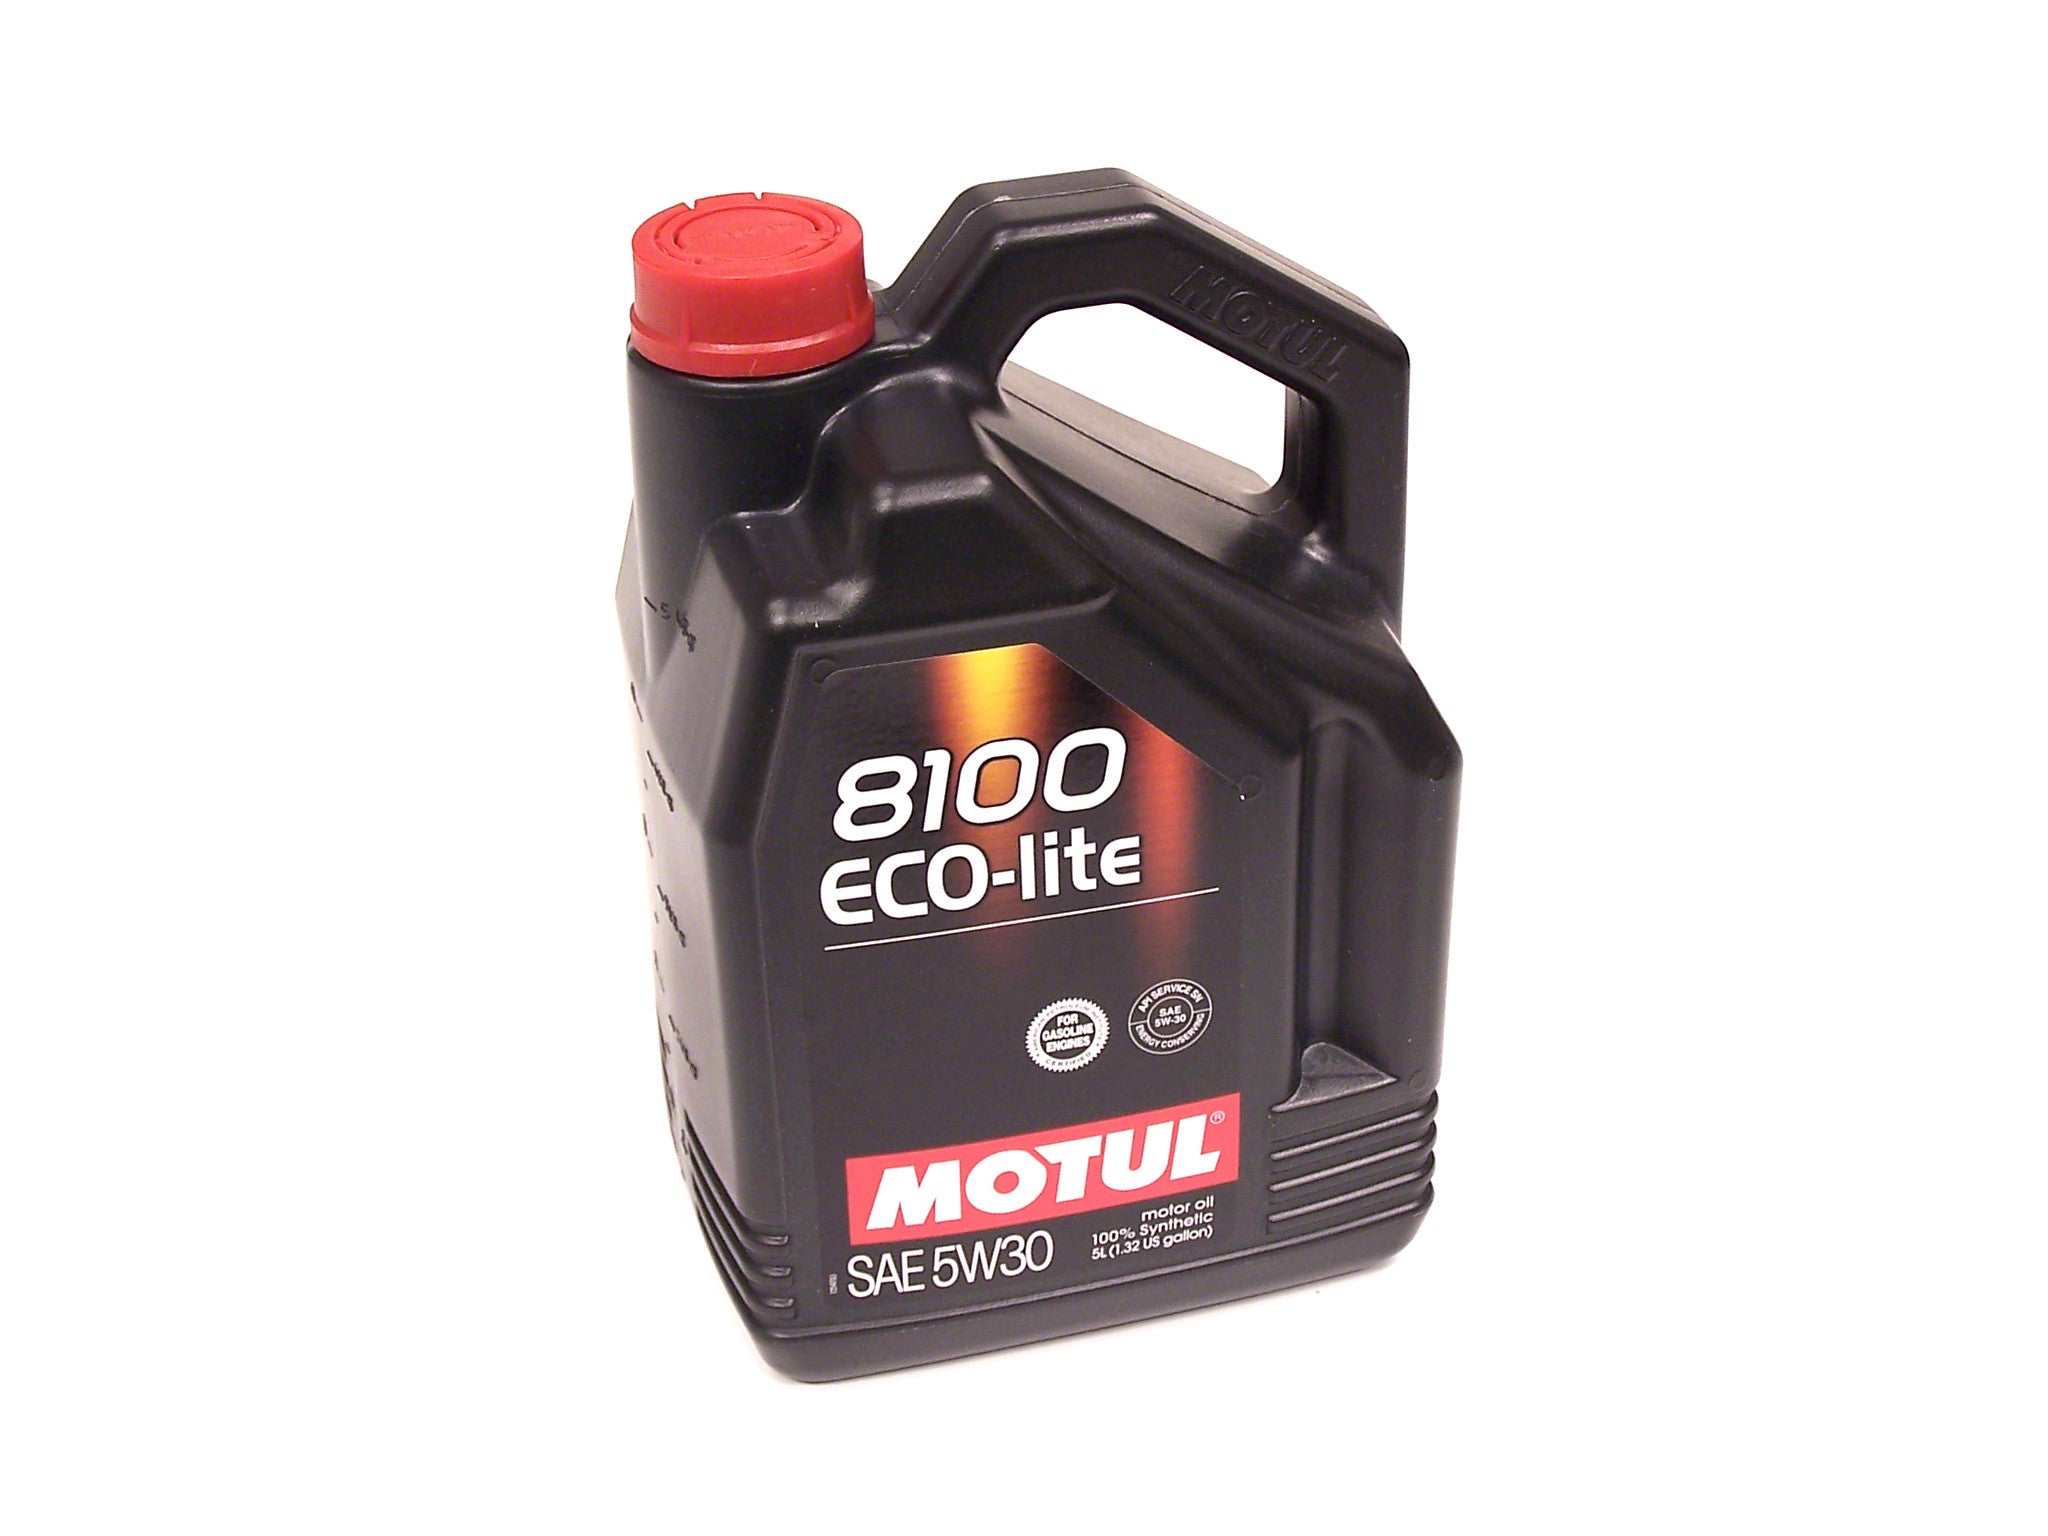 Motul USA 108214 5W30 8100 Eco-Lite Engine Oil, 5 Liter - Pack of 4 